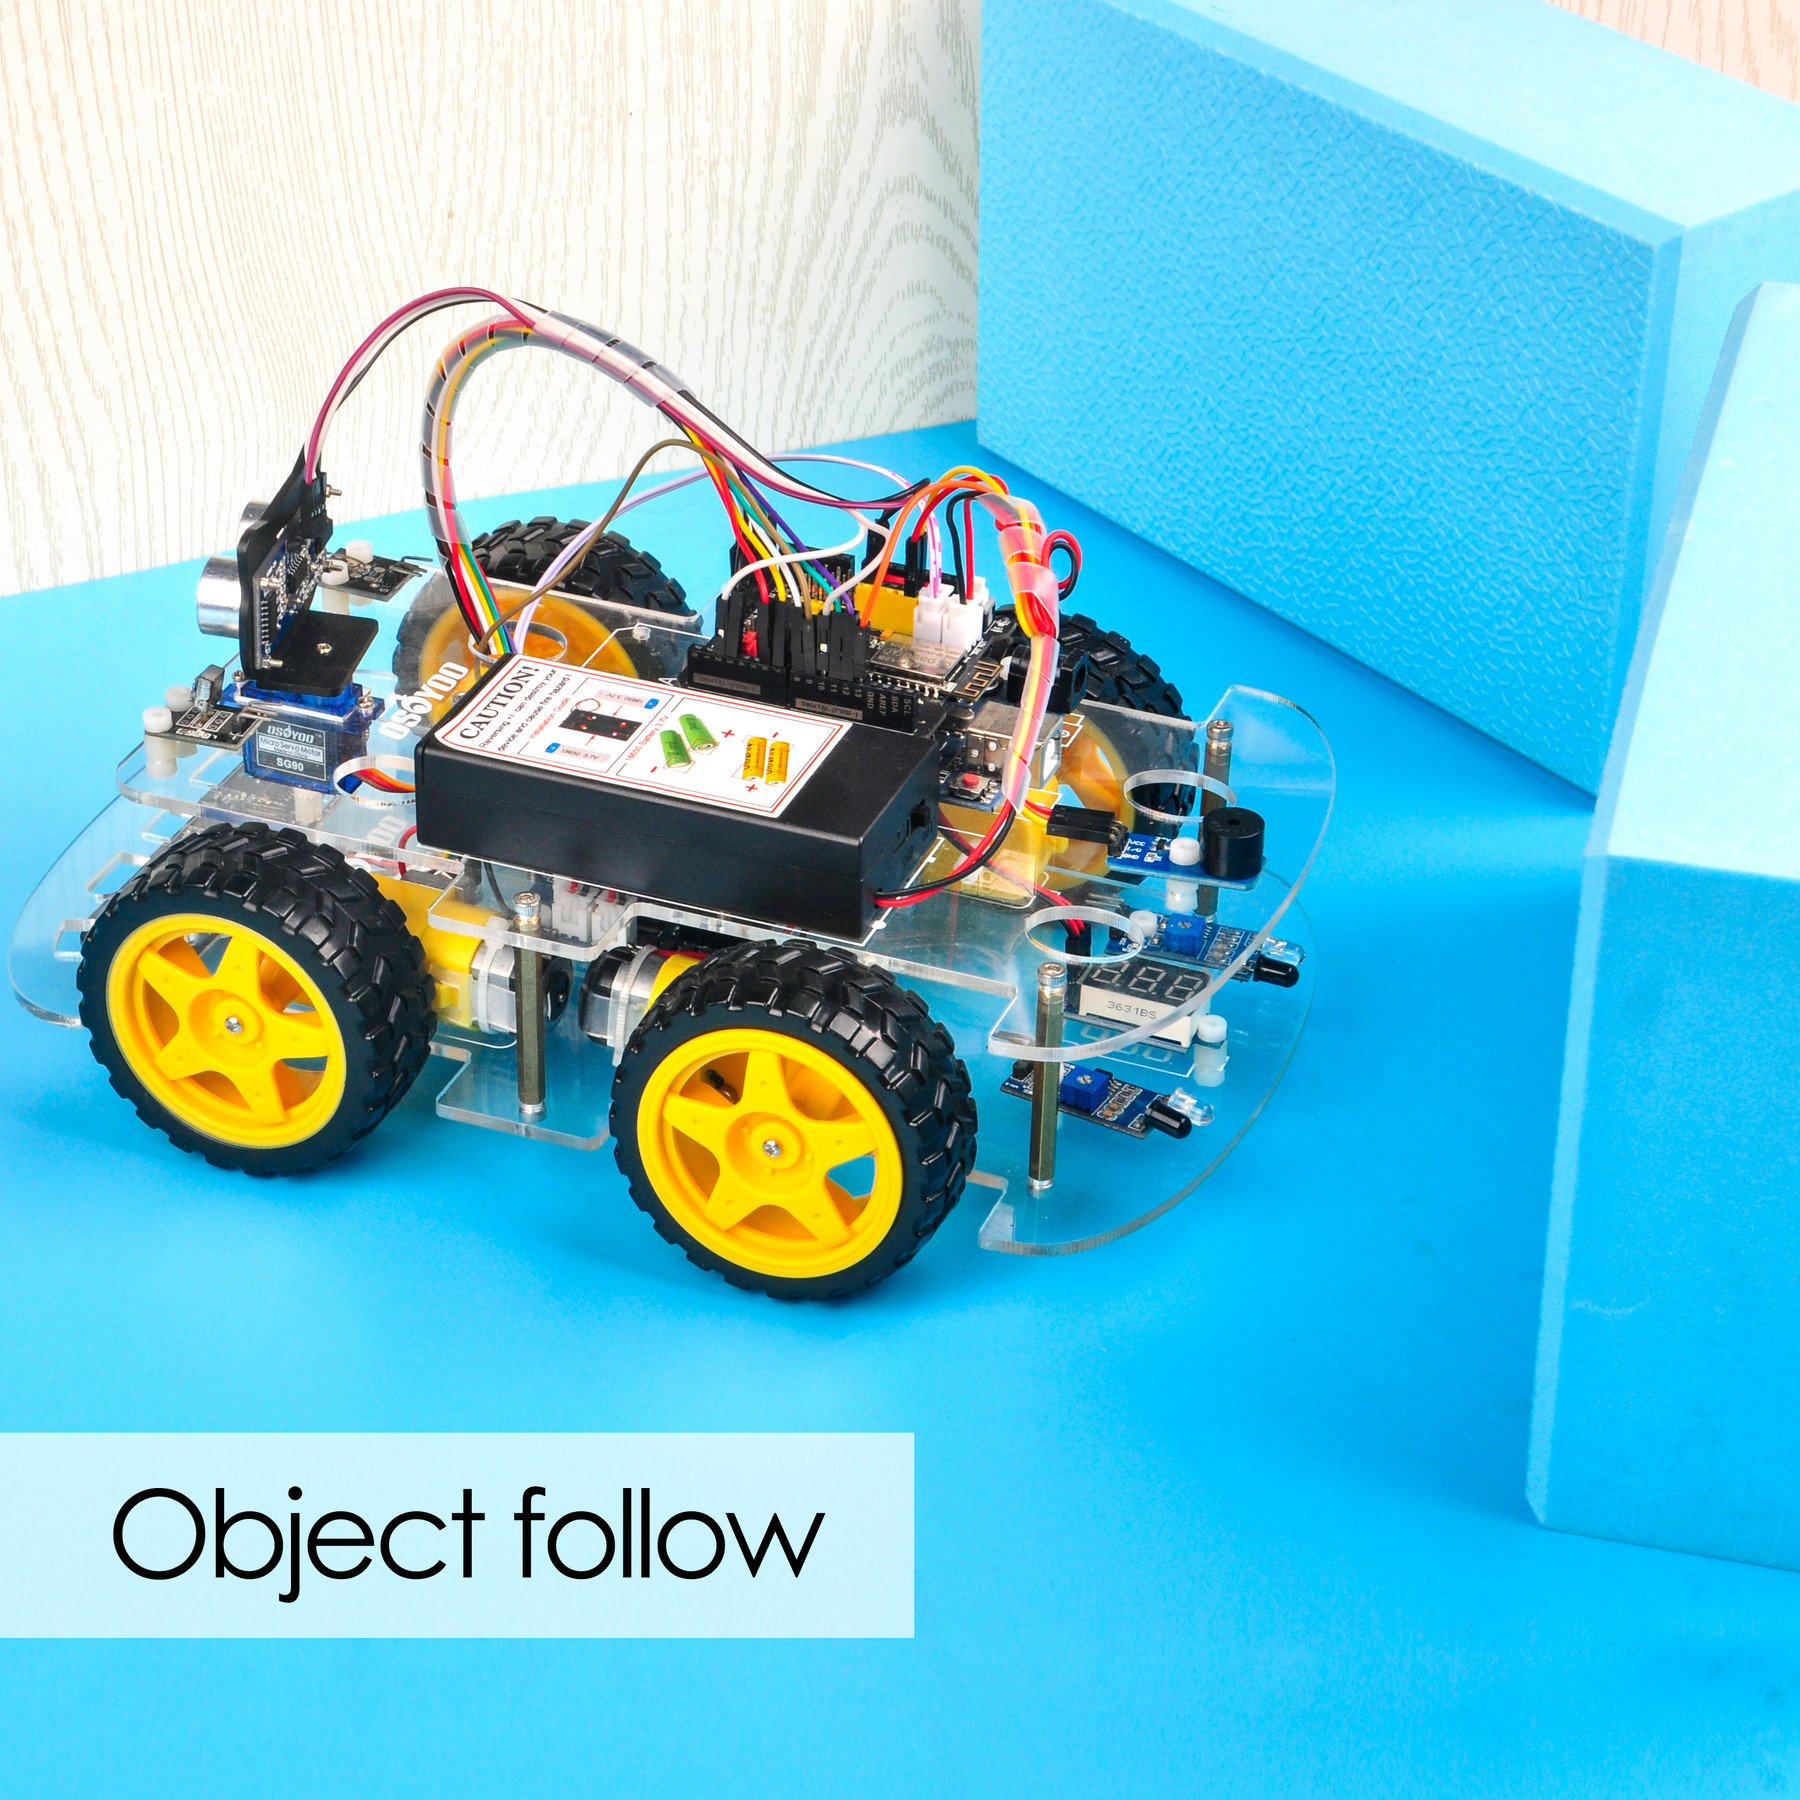 OSOYOO V2.1 Robot car kit Lesson 3: Object follow Robot car